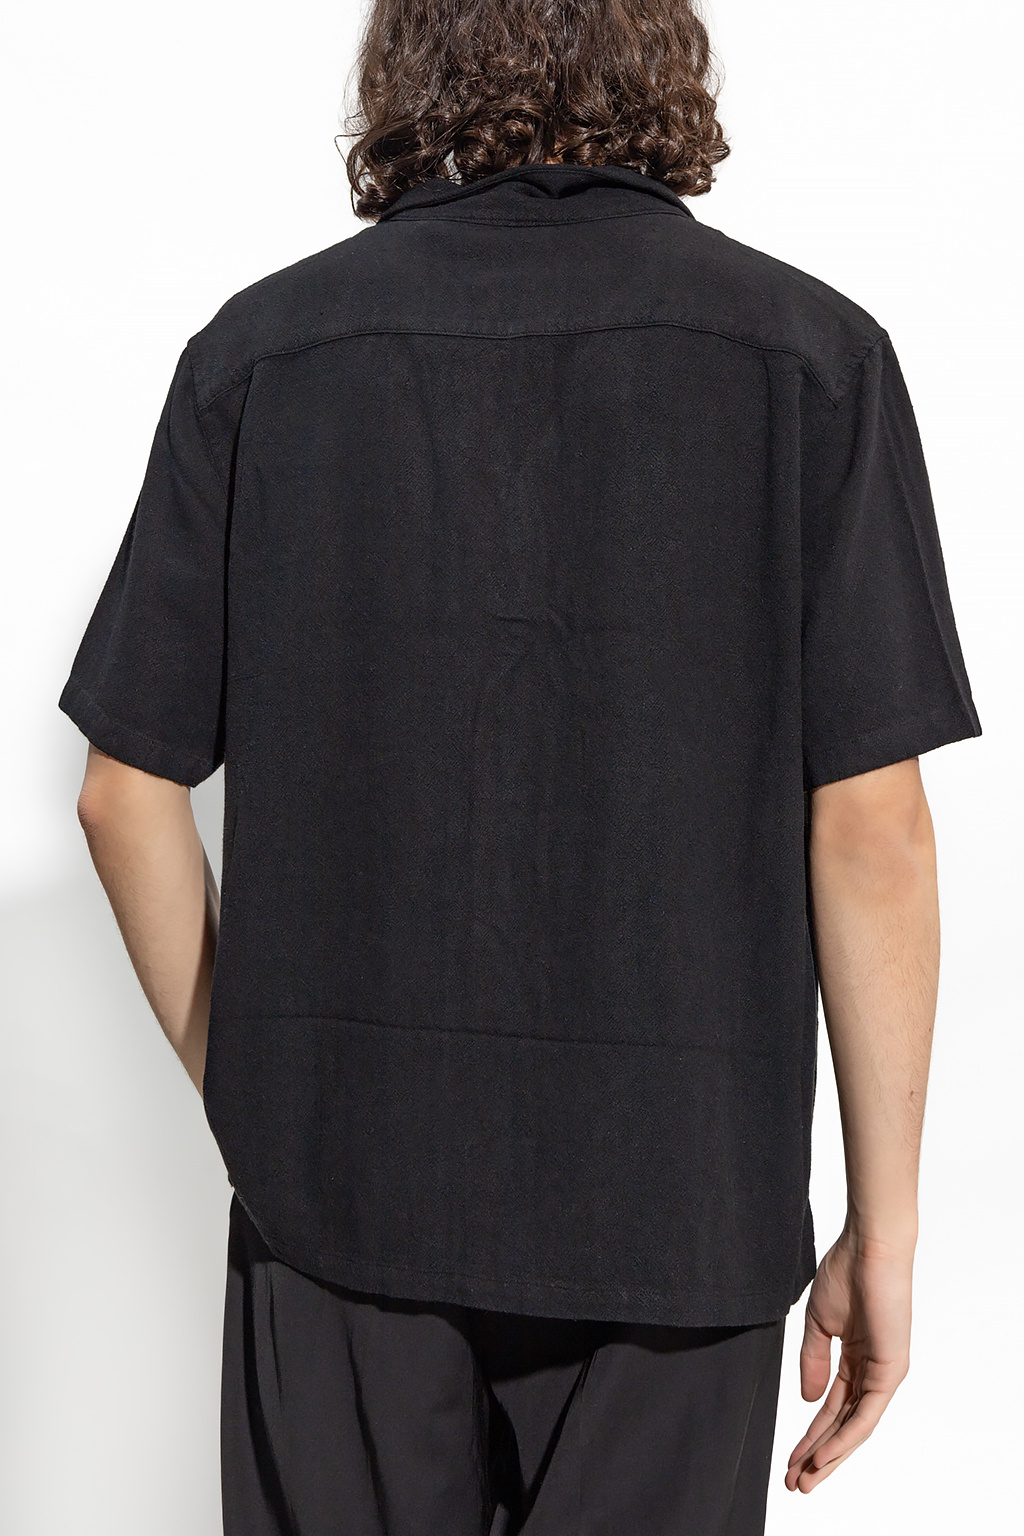 AllSaints ‘Cudi’ shirt with pocket